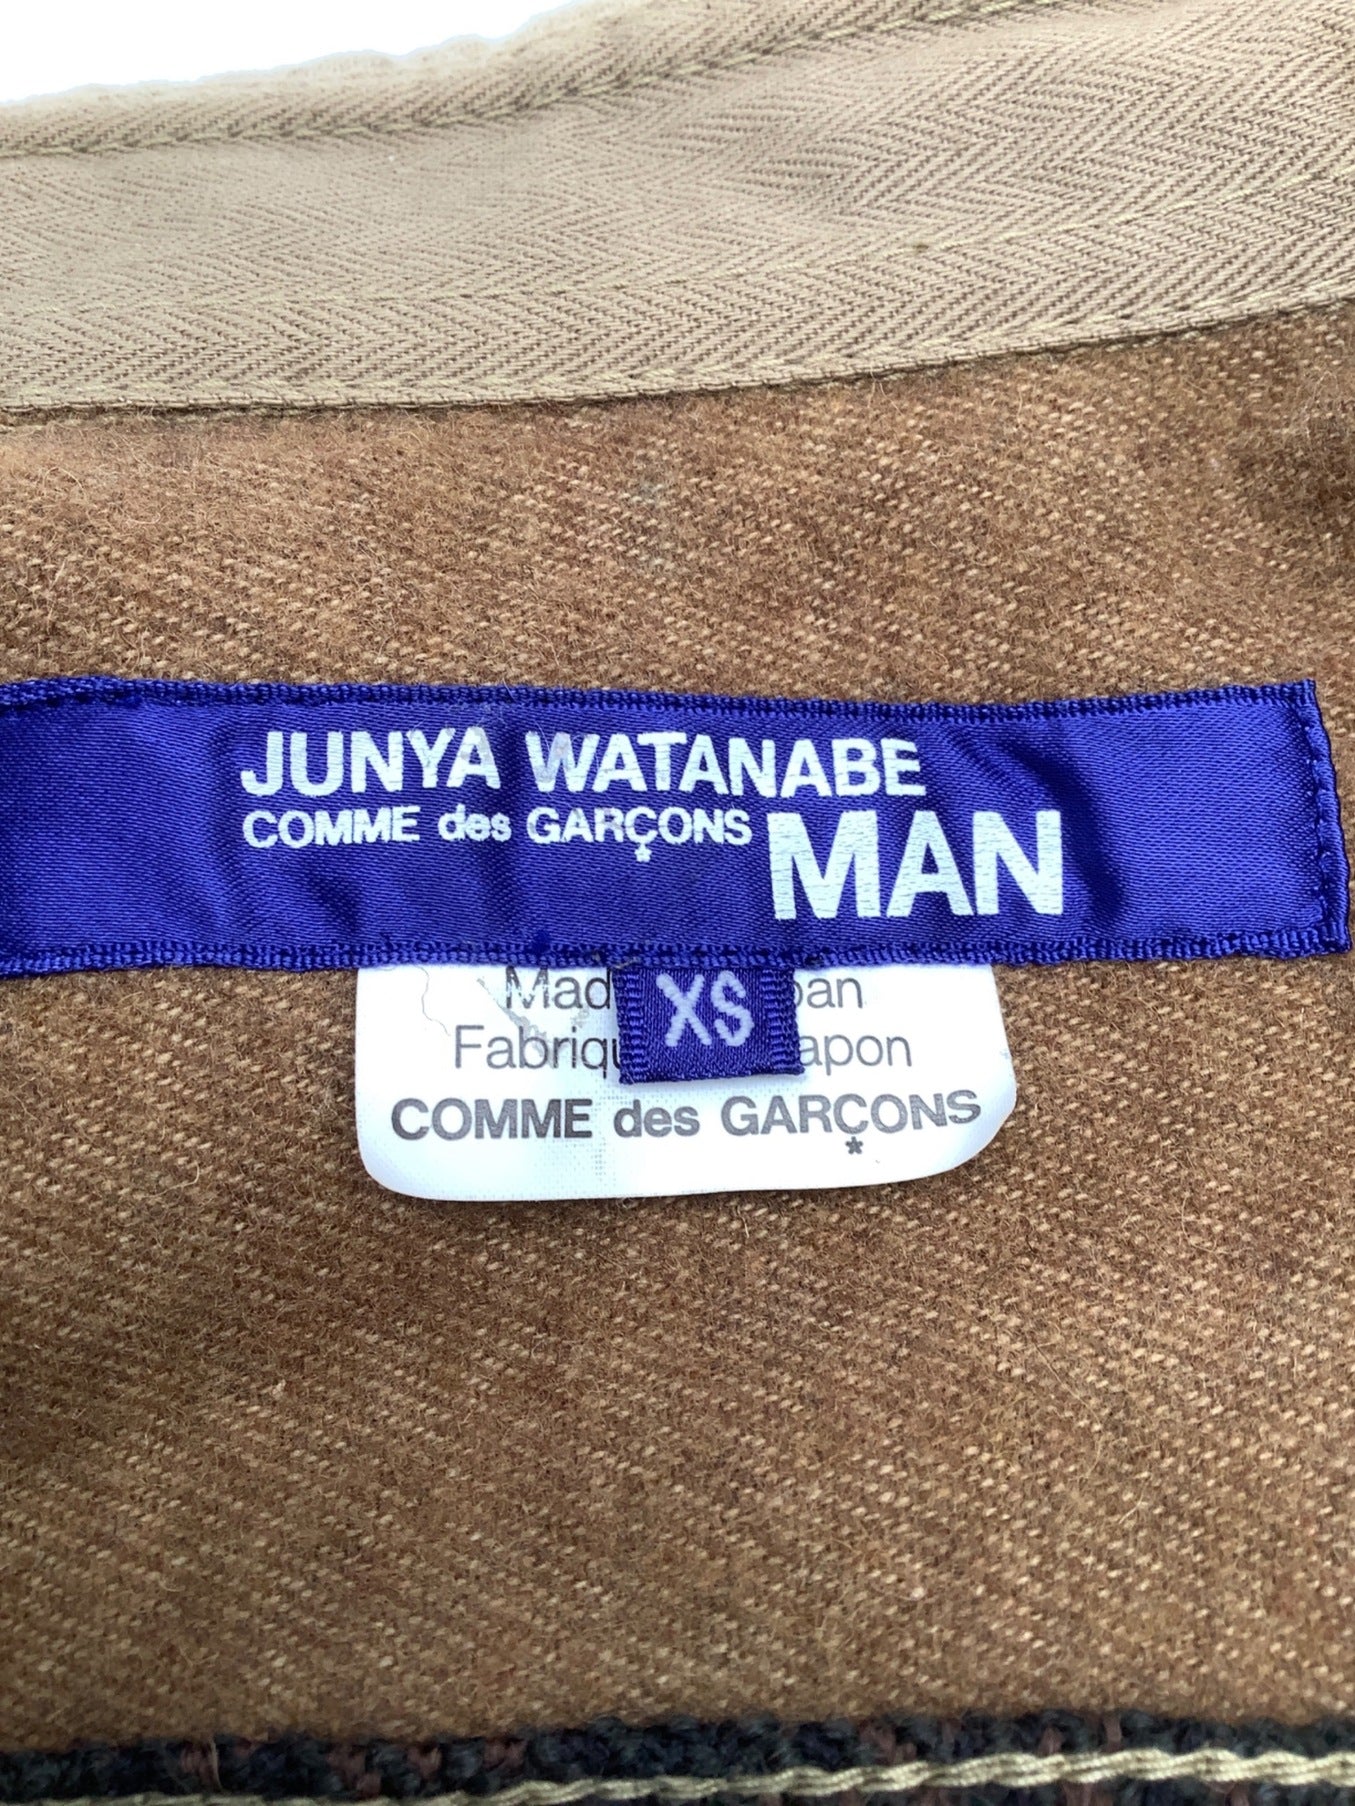 COMME des GARCONS JUNYA WATANABE MAN shirt jacket WJ-B041